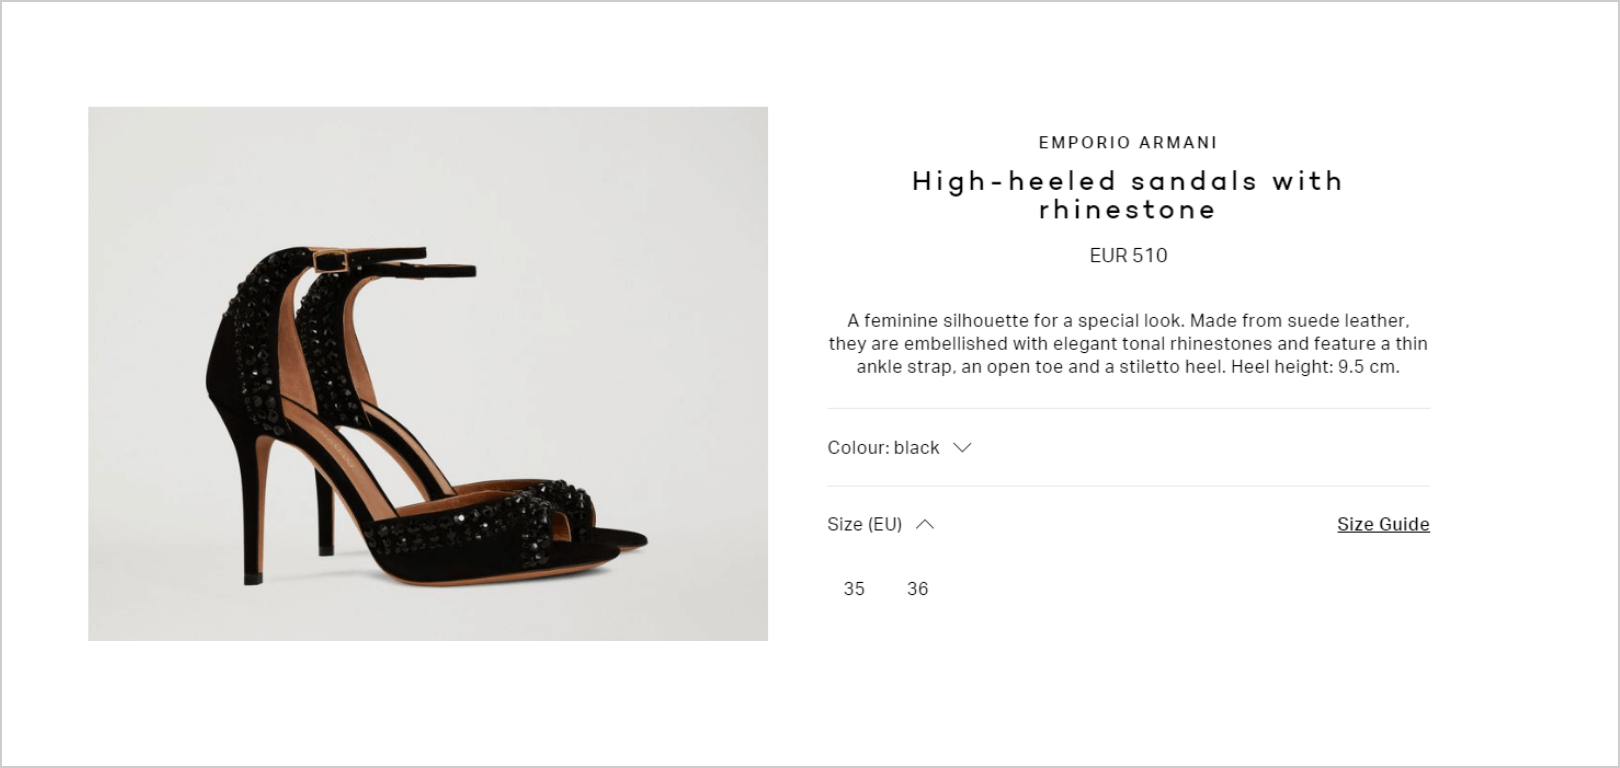 Emporio Armani high-heeled sandals product description